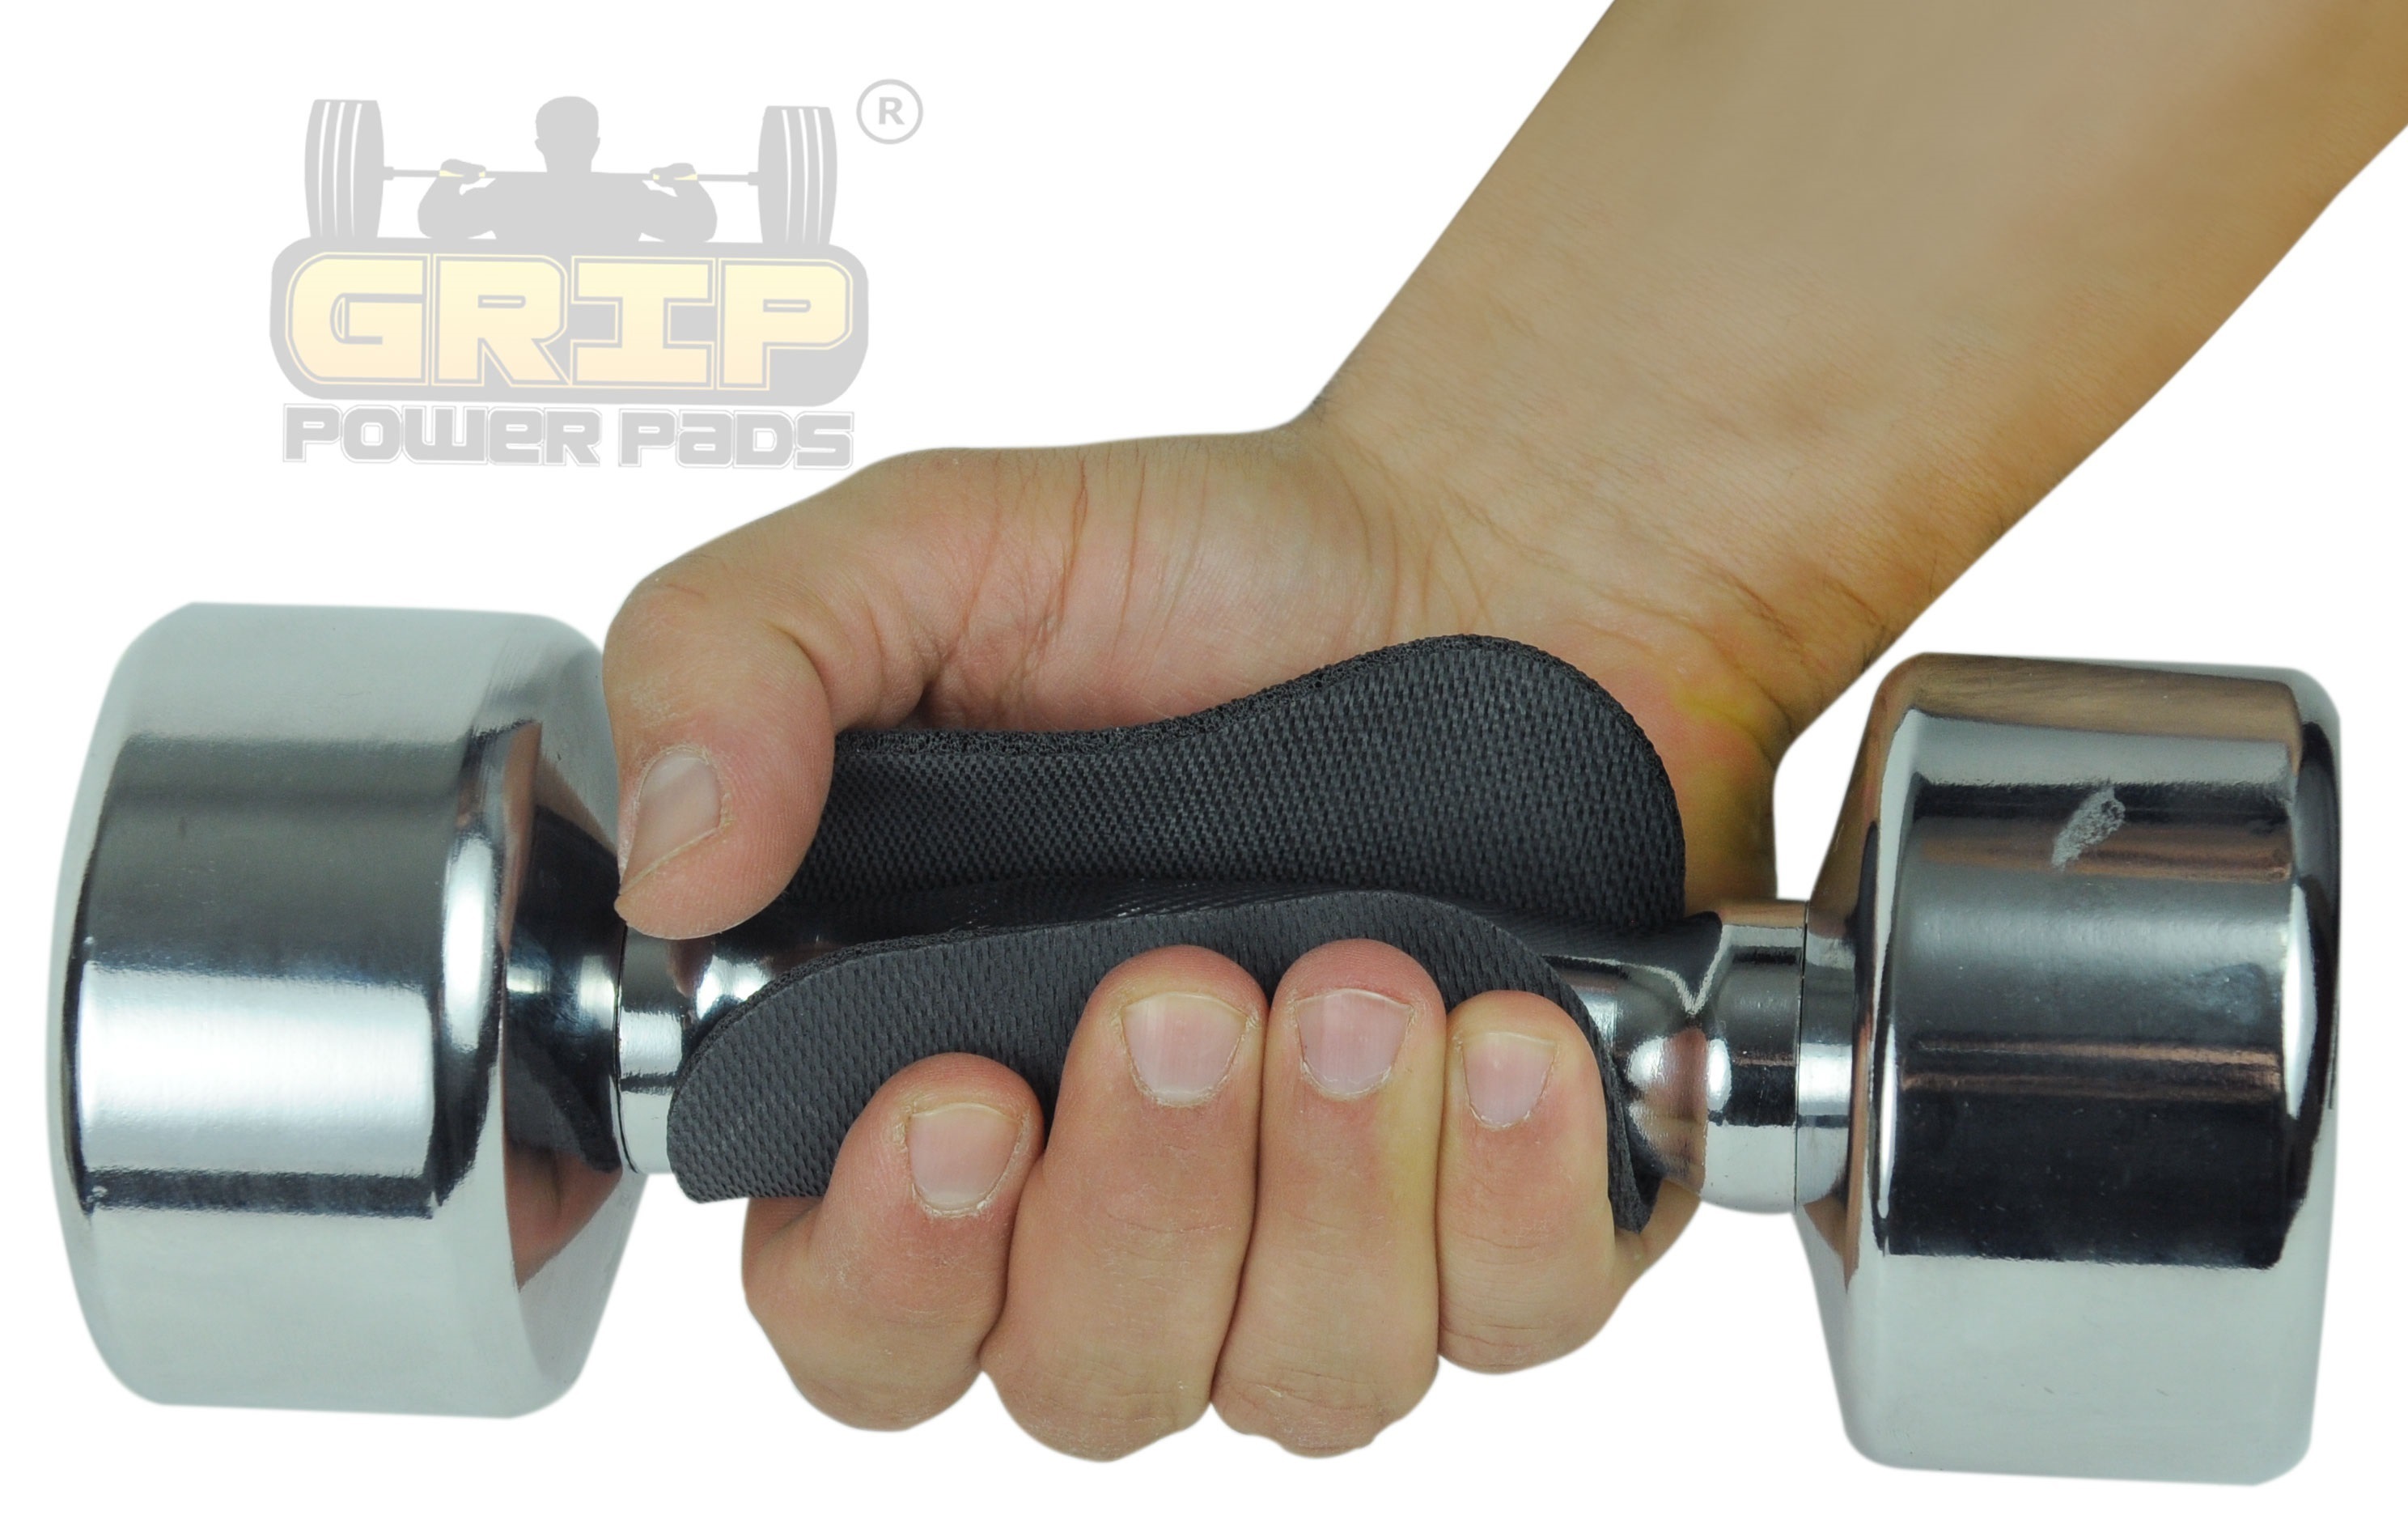  Grip Power Pads Original Lifting Grips The